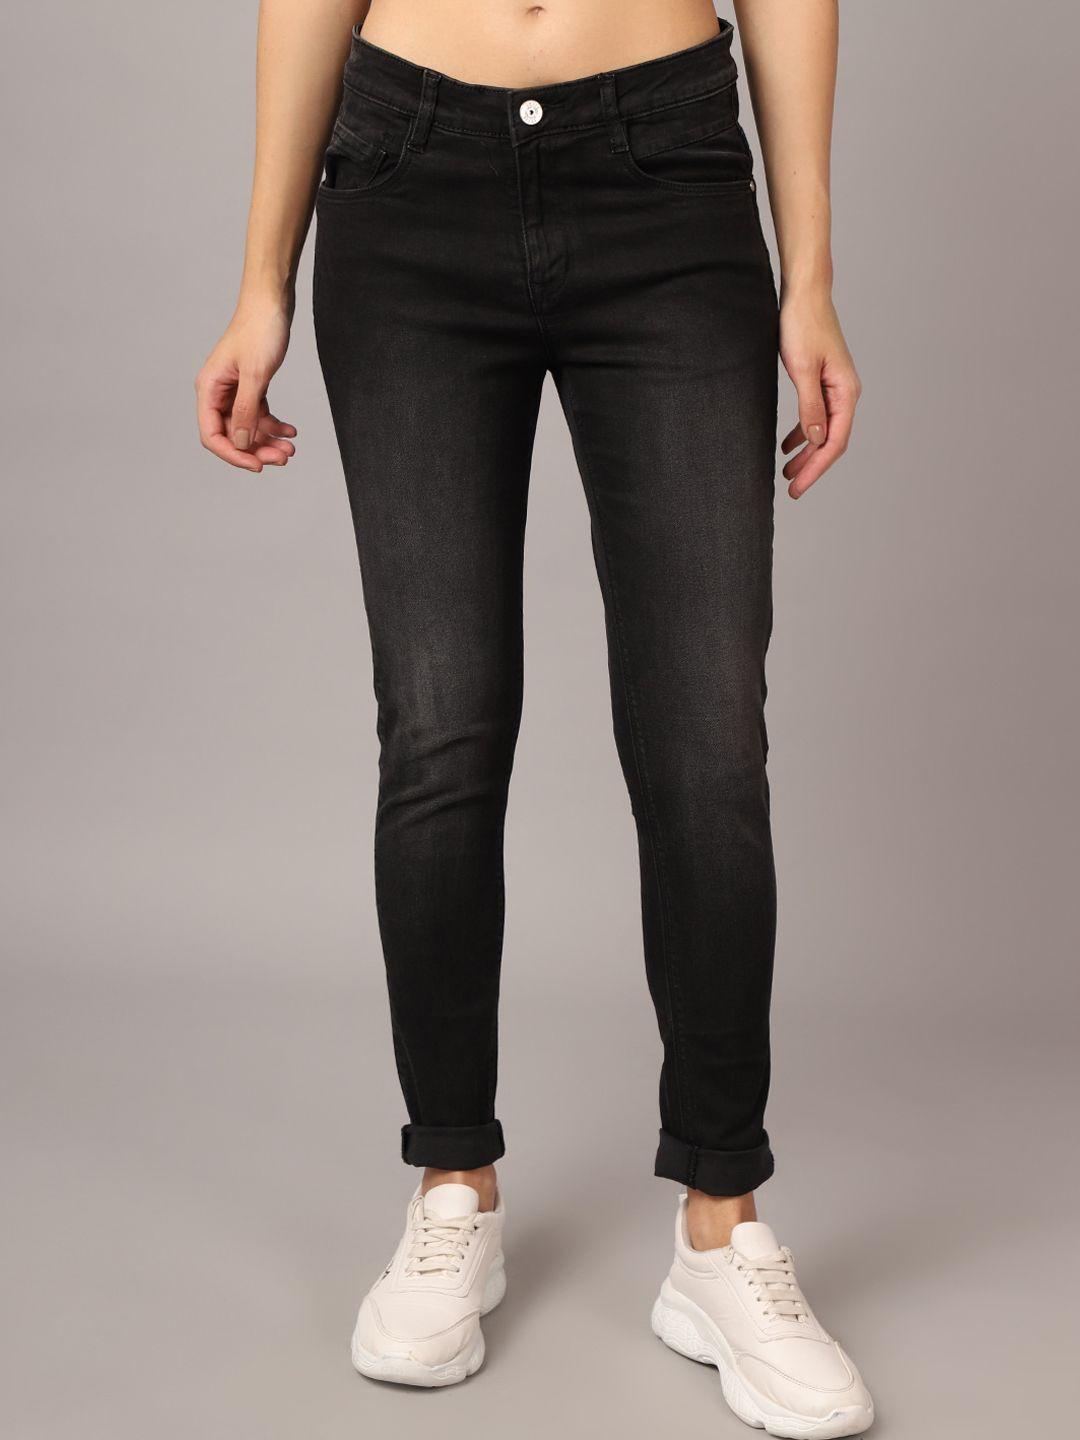 crozo by cantabil women black low-rise light fade jeans